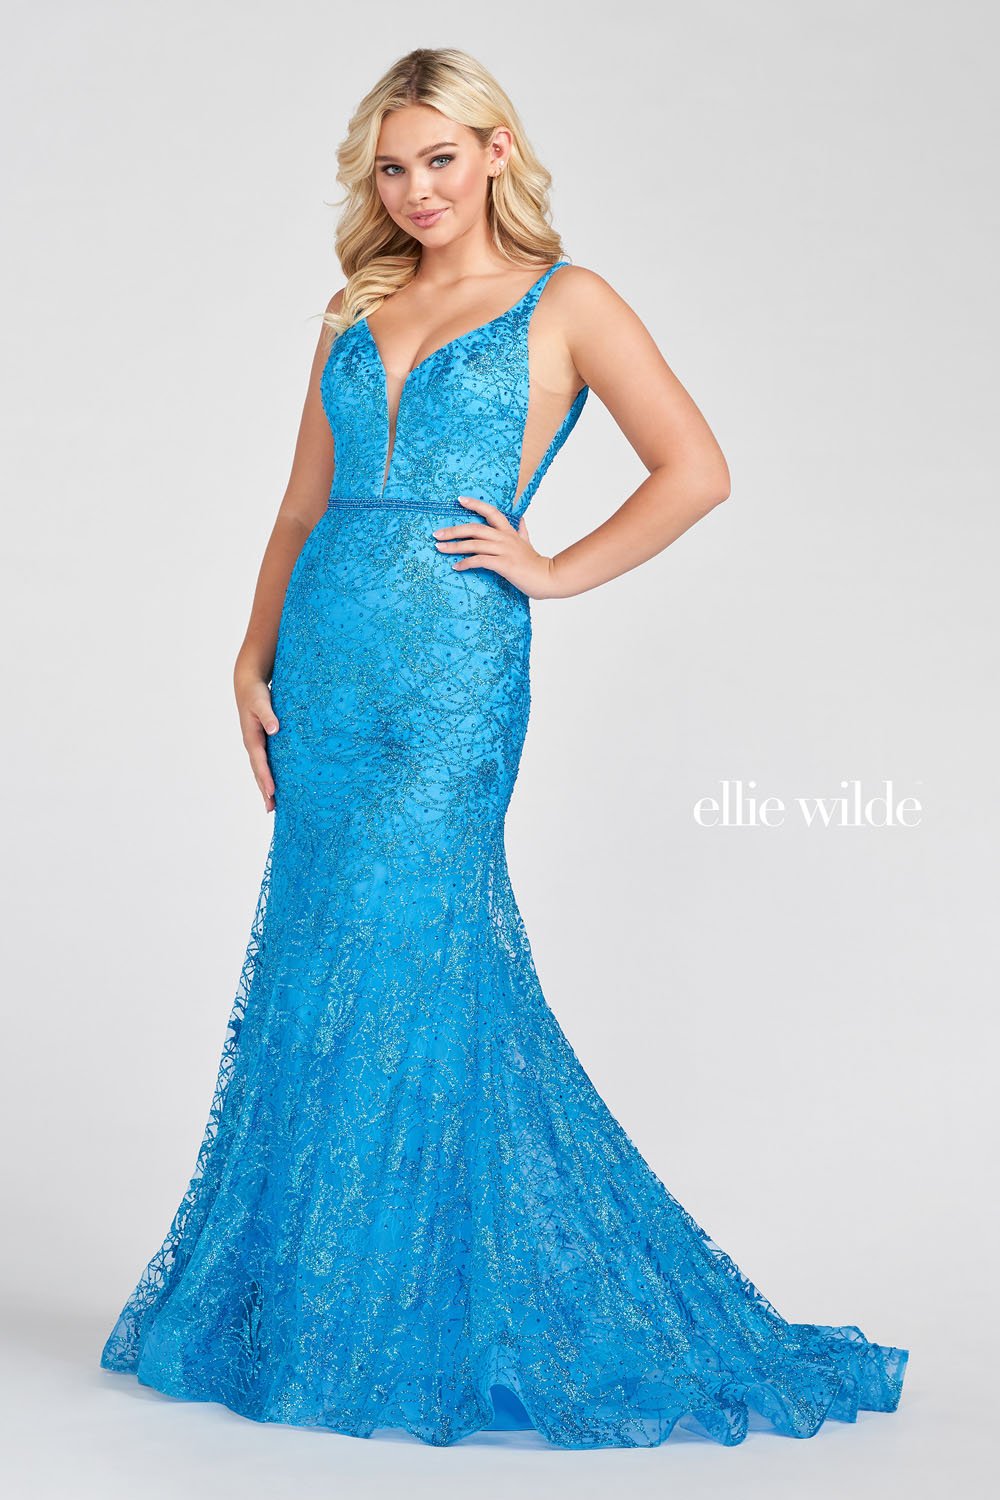 Ellie Wilde Turquoise EW122056 Prom Dress Image.  Turquoise formal dress.